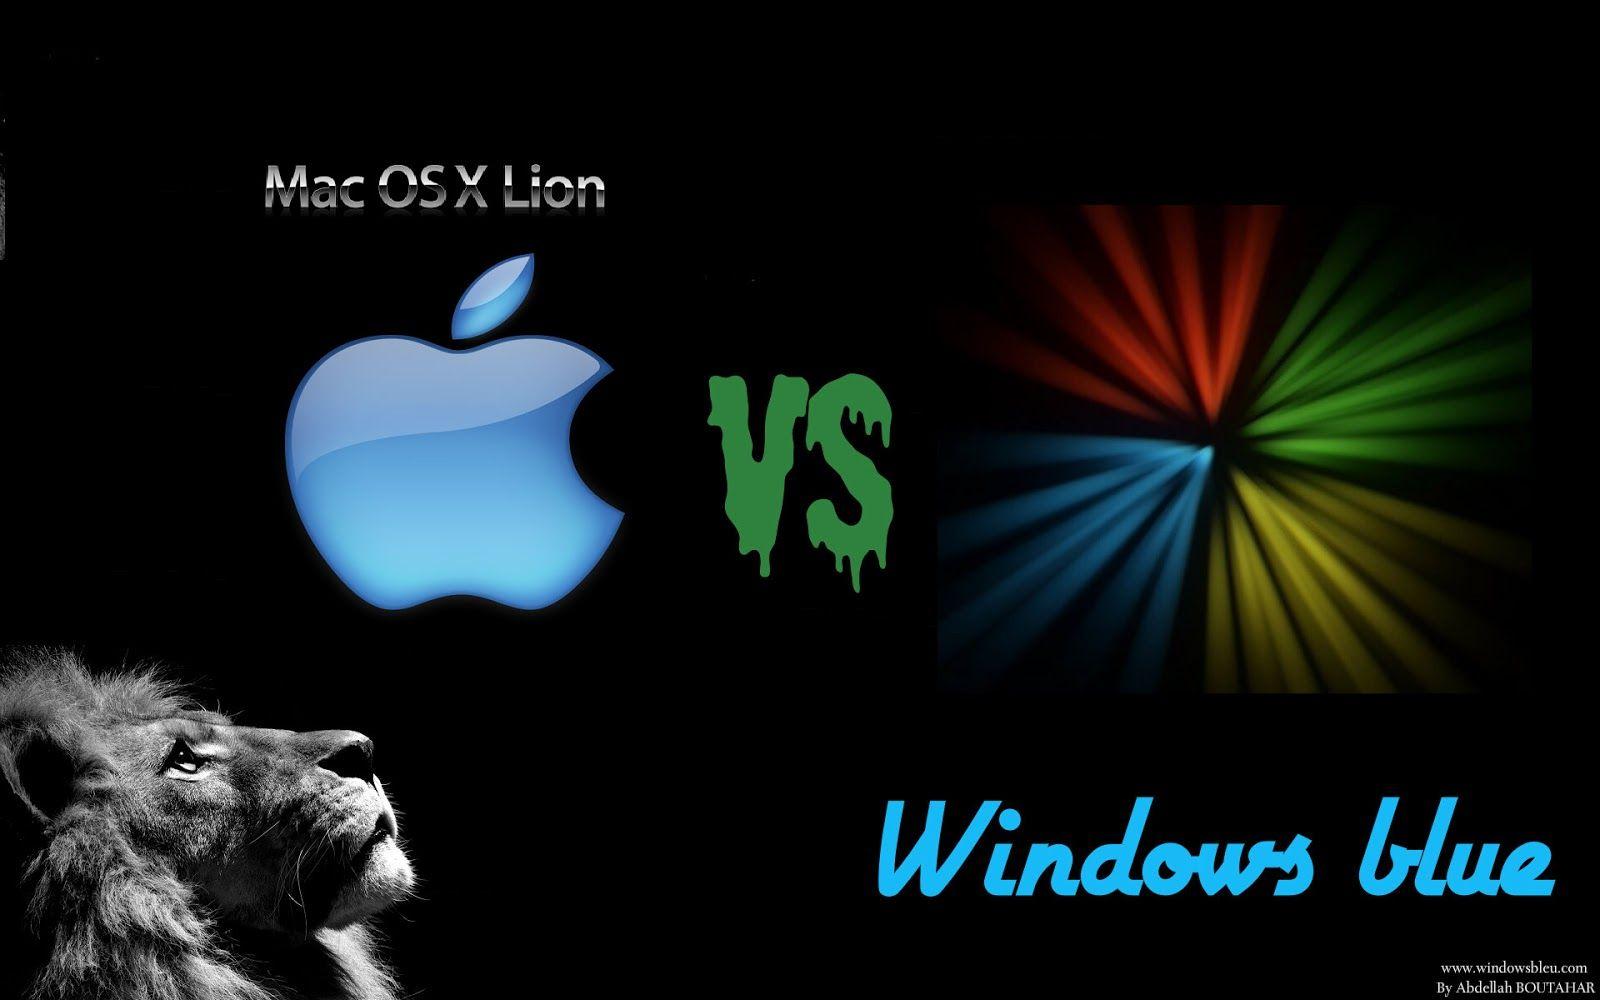 Mac Os Vs Windows (id: 57816)